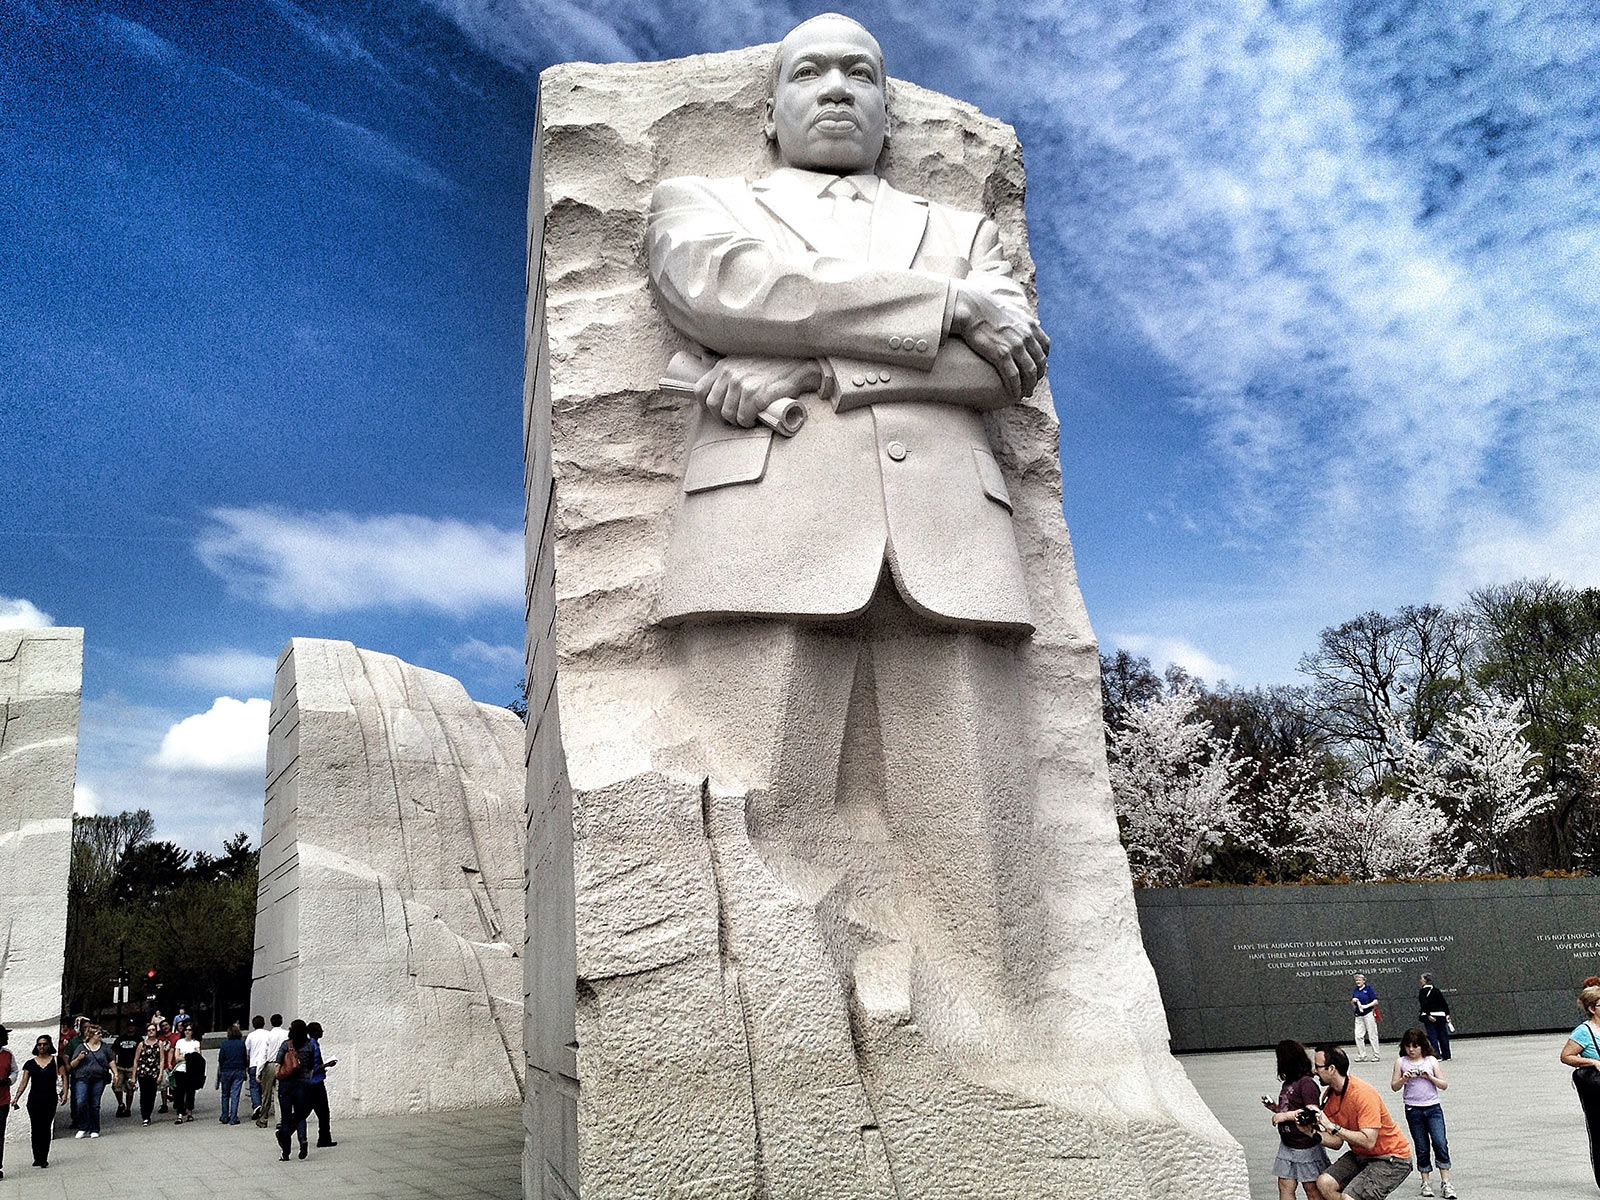 Monumento a Martin Luther King, Jr. - National Mall - Washington, DC